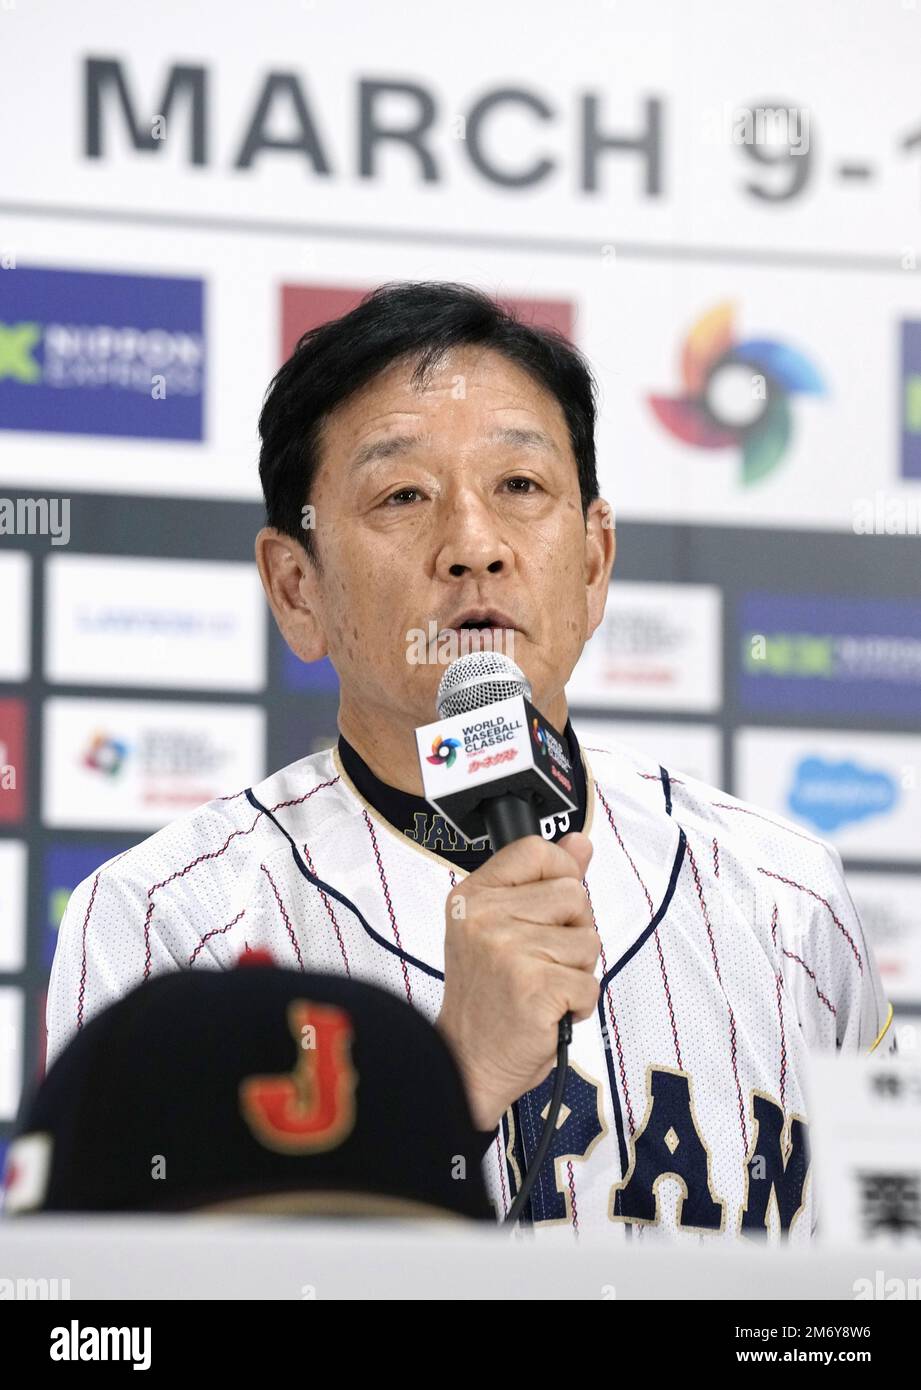 Shohei Ohtani's mentor Hideki Kuriyama to step down as Fighters manager -  The Japan Times